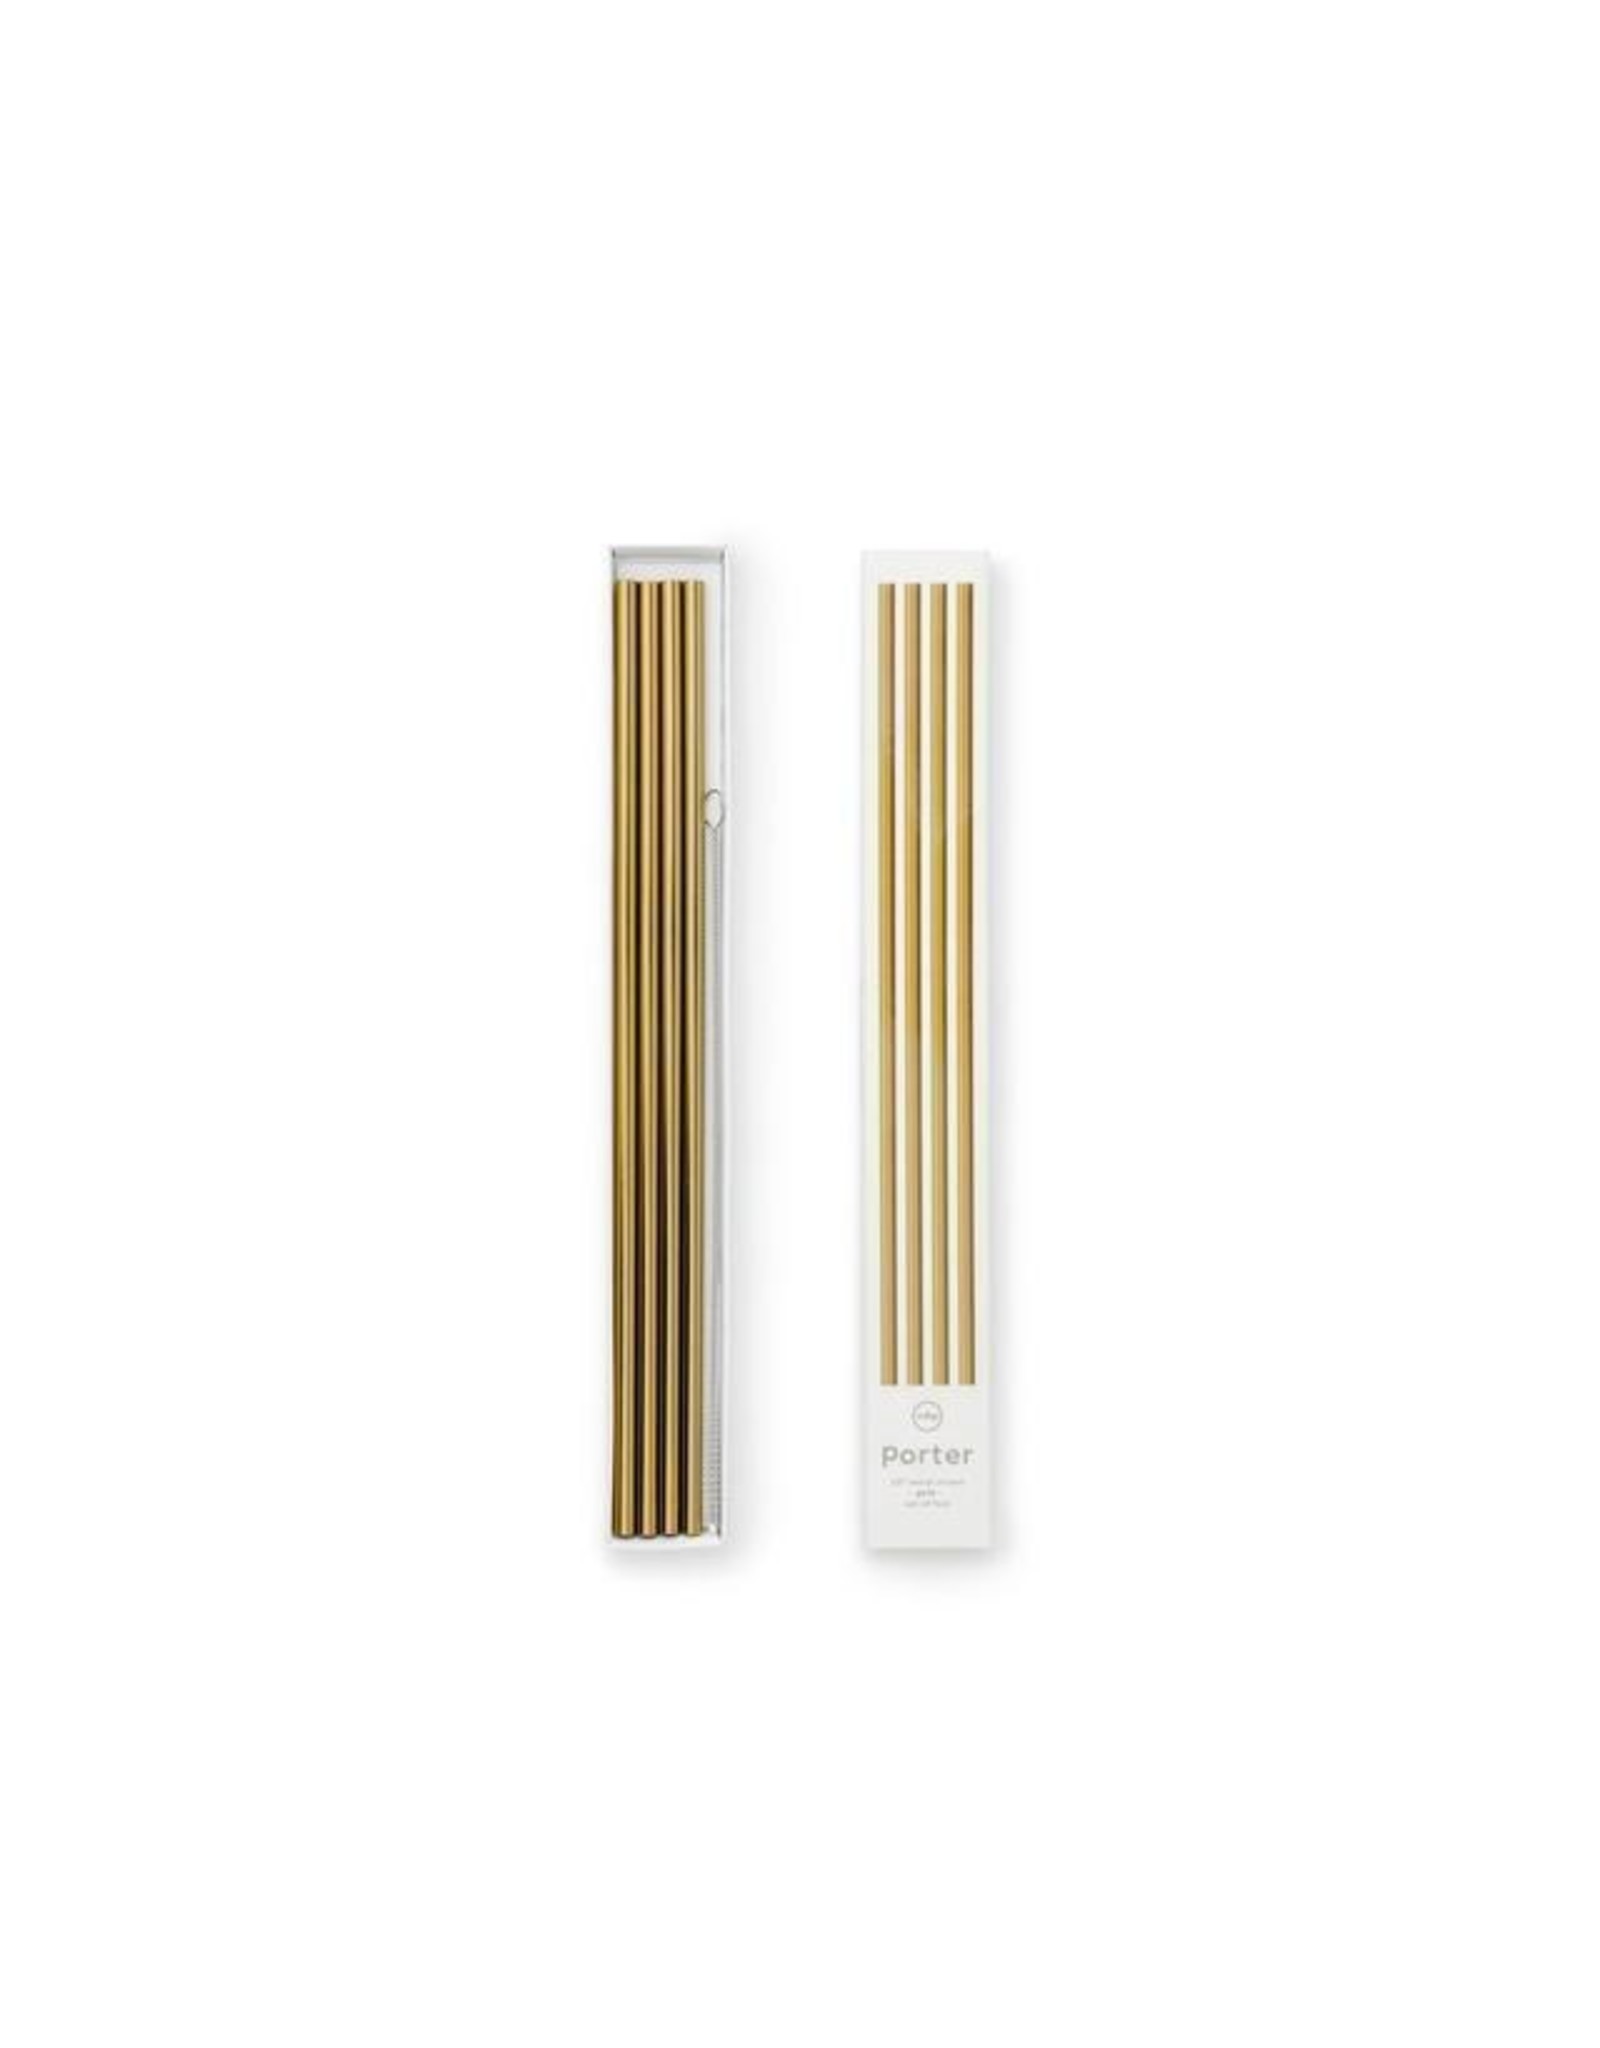 W&P Design Porter Straw, Gold - 10in